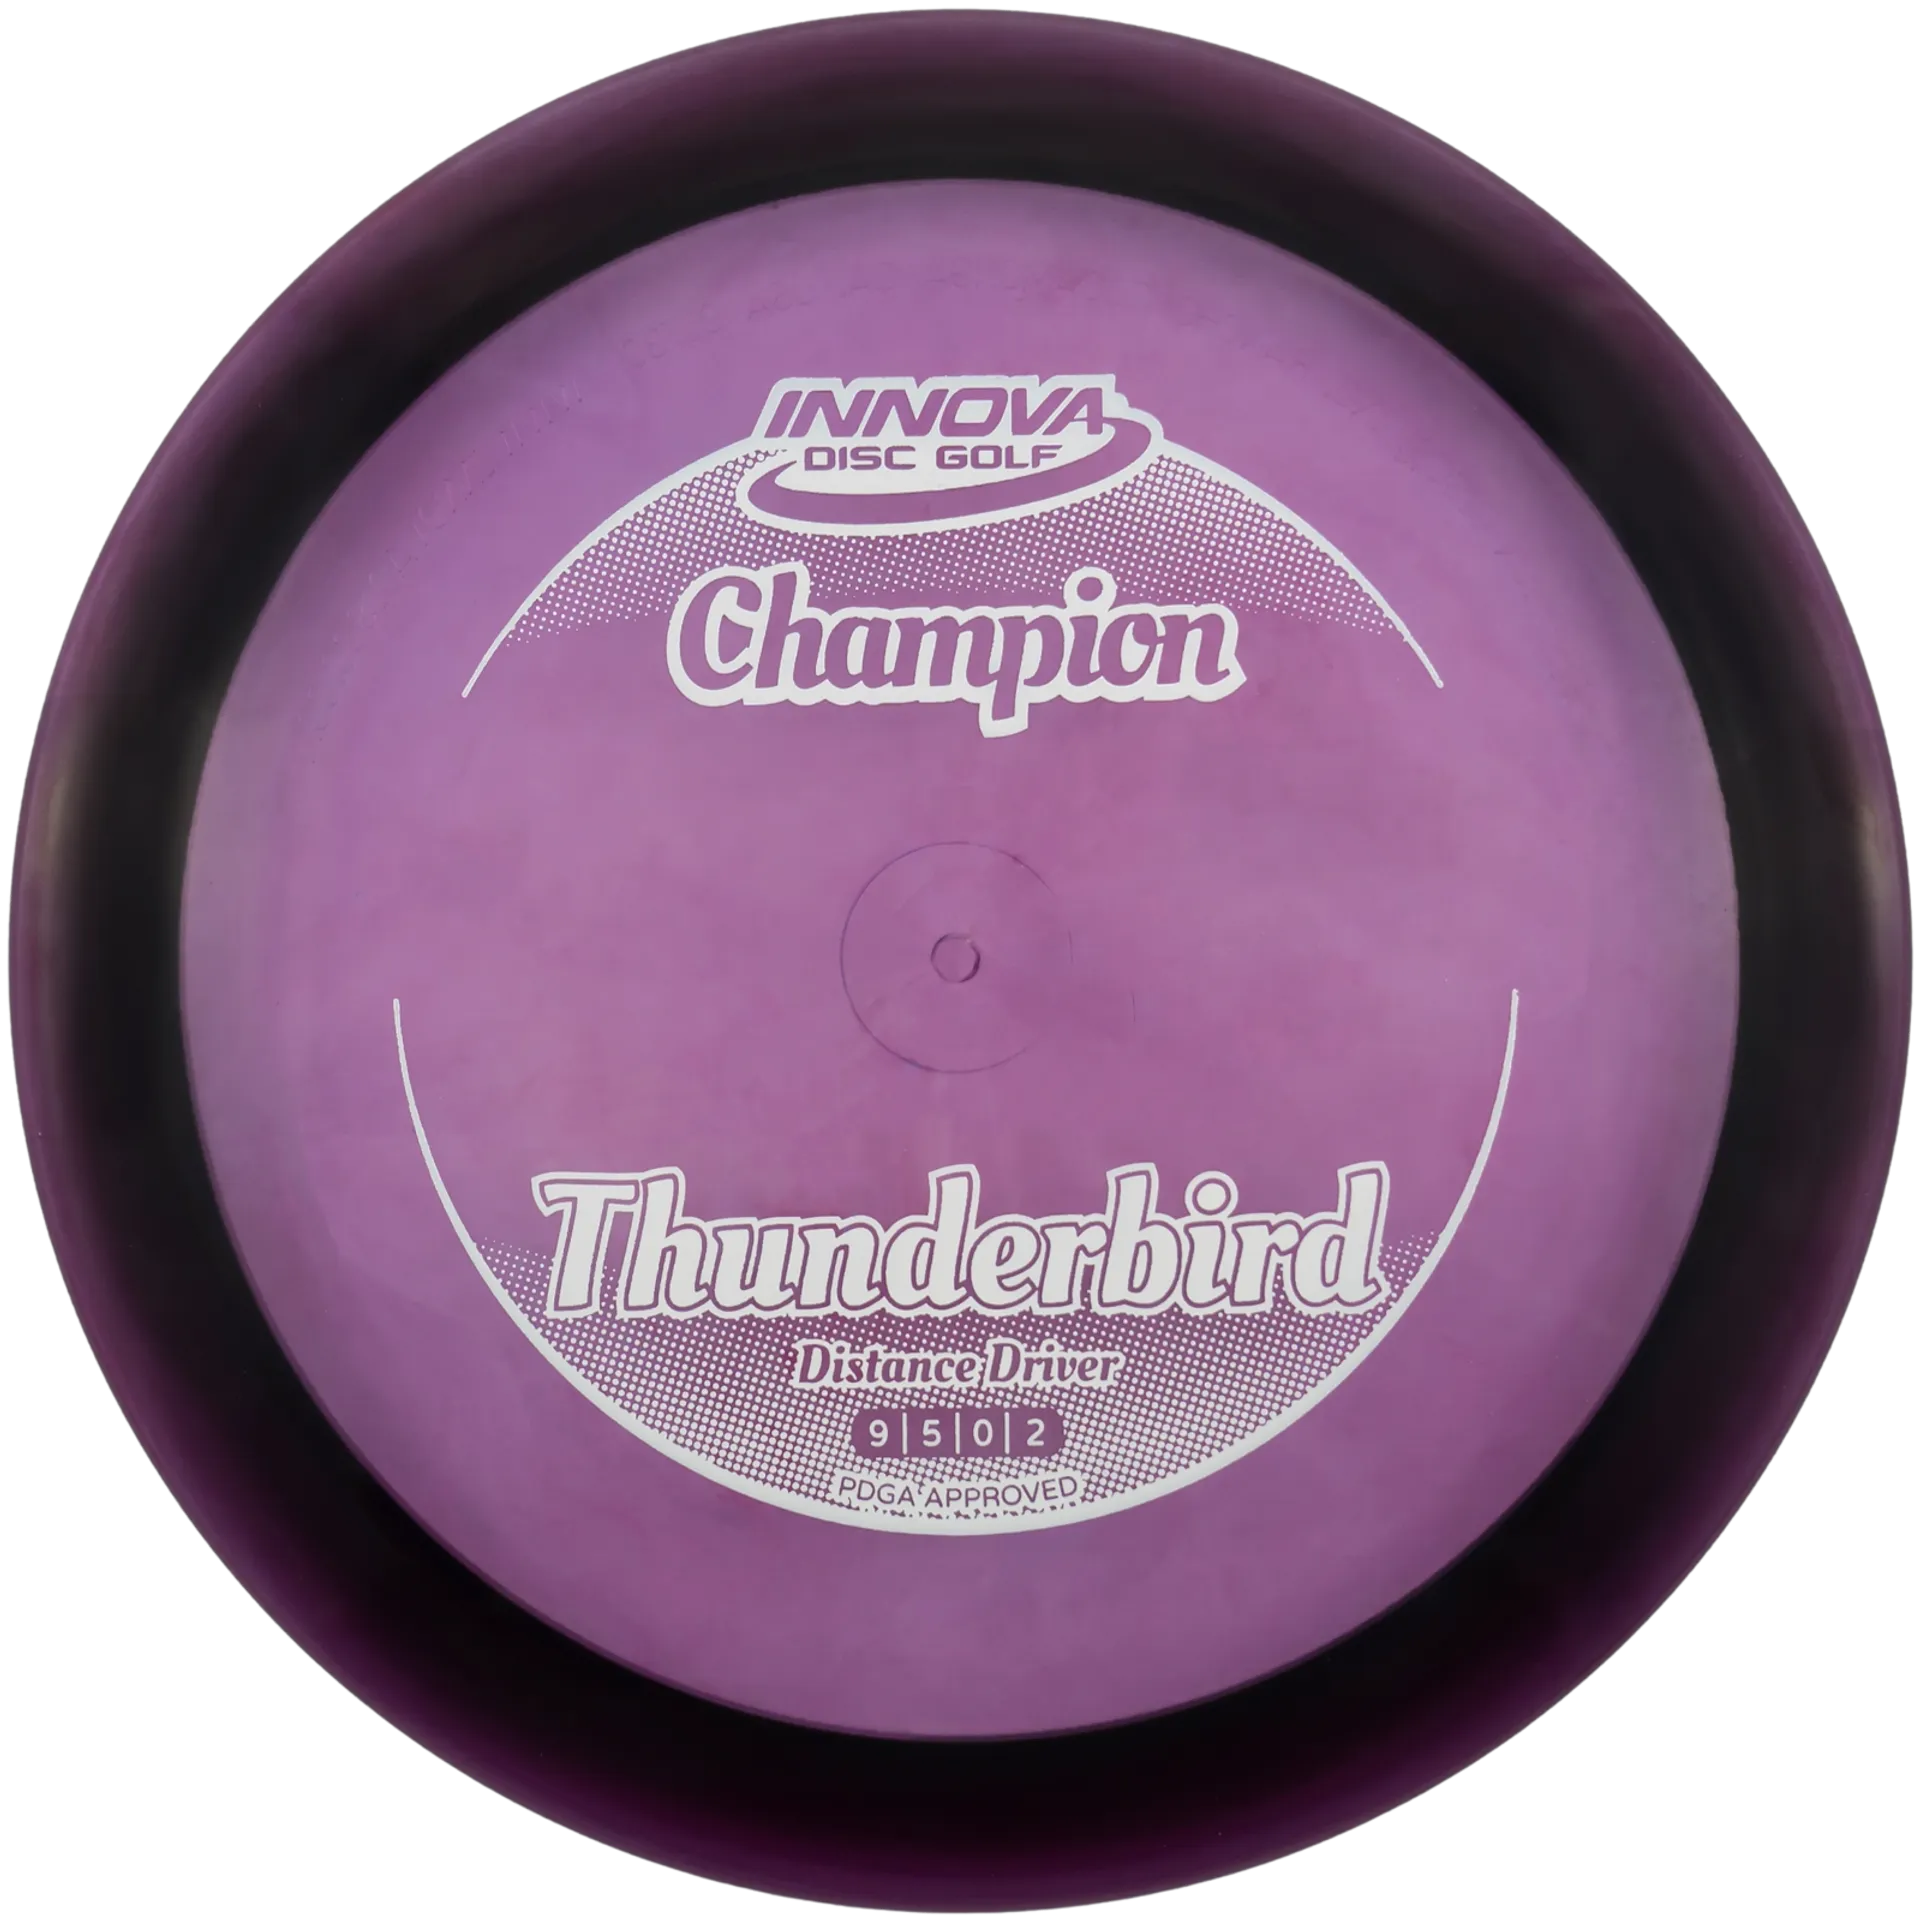 Innova pituusdraiveri Champion Thunderbird